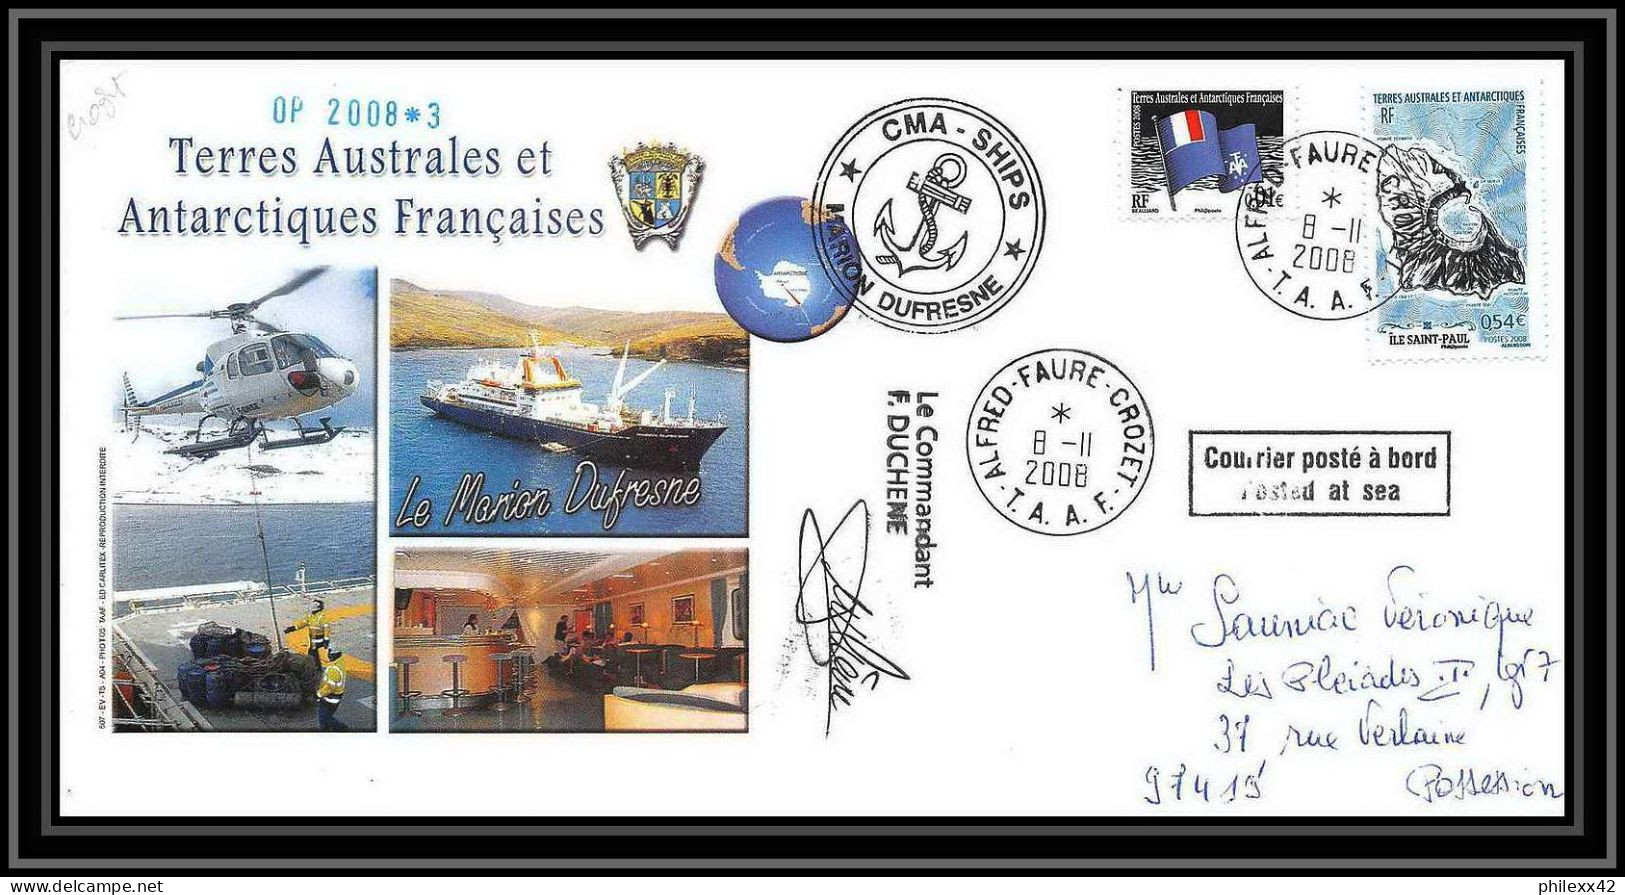 2845 ANTARCTIC Terres Australes TAAF Helilagon Lettre Cover Dufresne Signé Signed Op 2008/3 Crozet 8/11/2008 N°506 - Helikopters